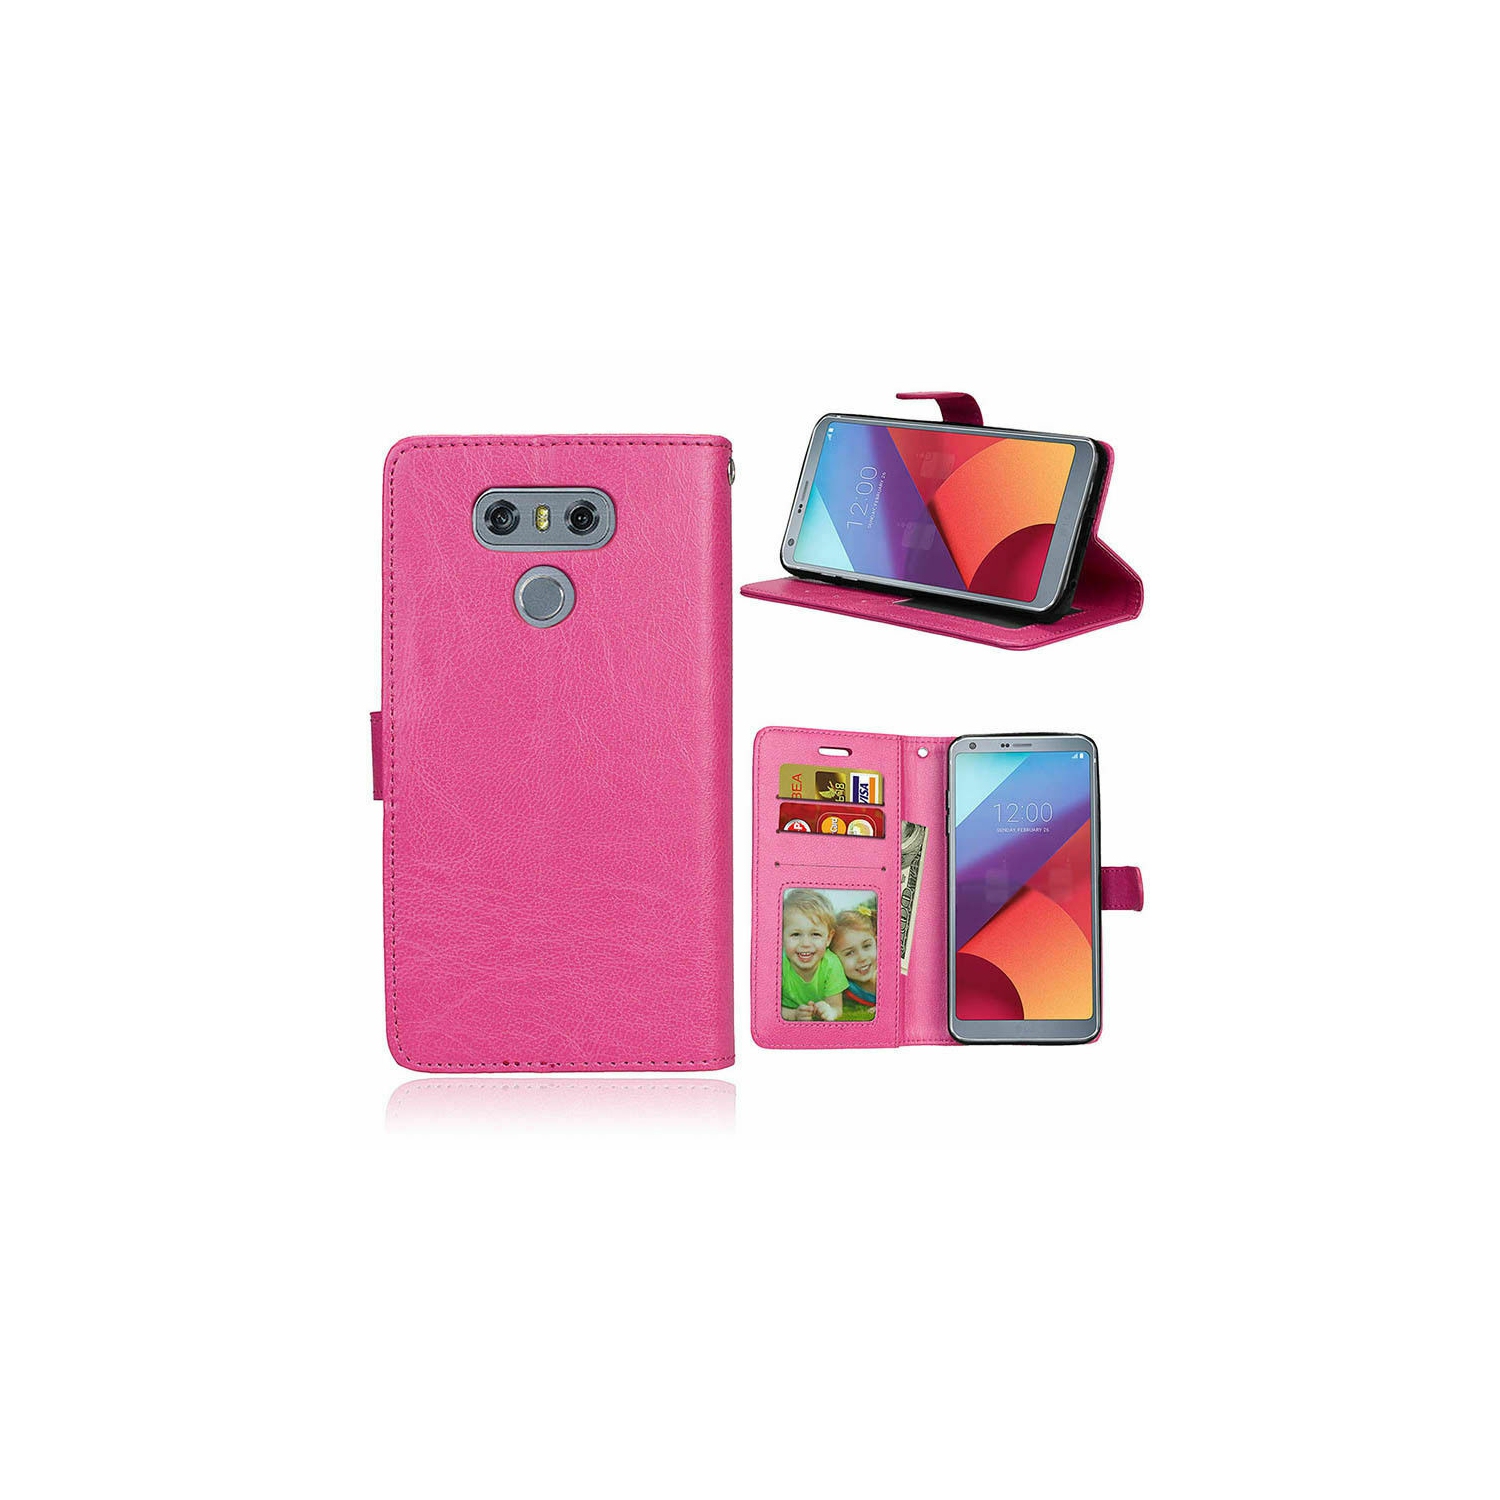 【CSmart】 Magnetic Card Slot Leather Folio Wallet Flip Case Cover for LG G5, Hot Pink